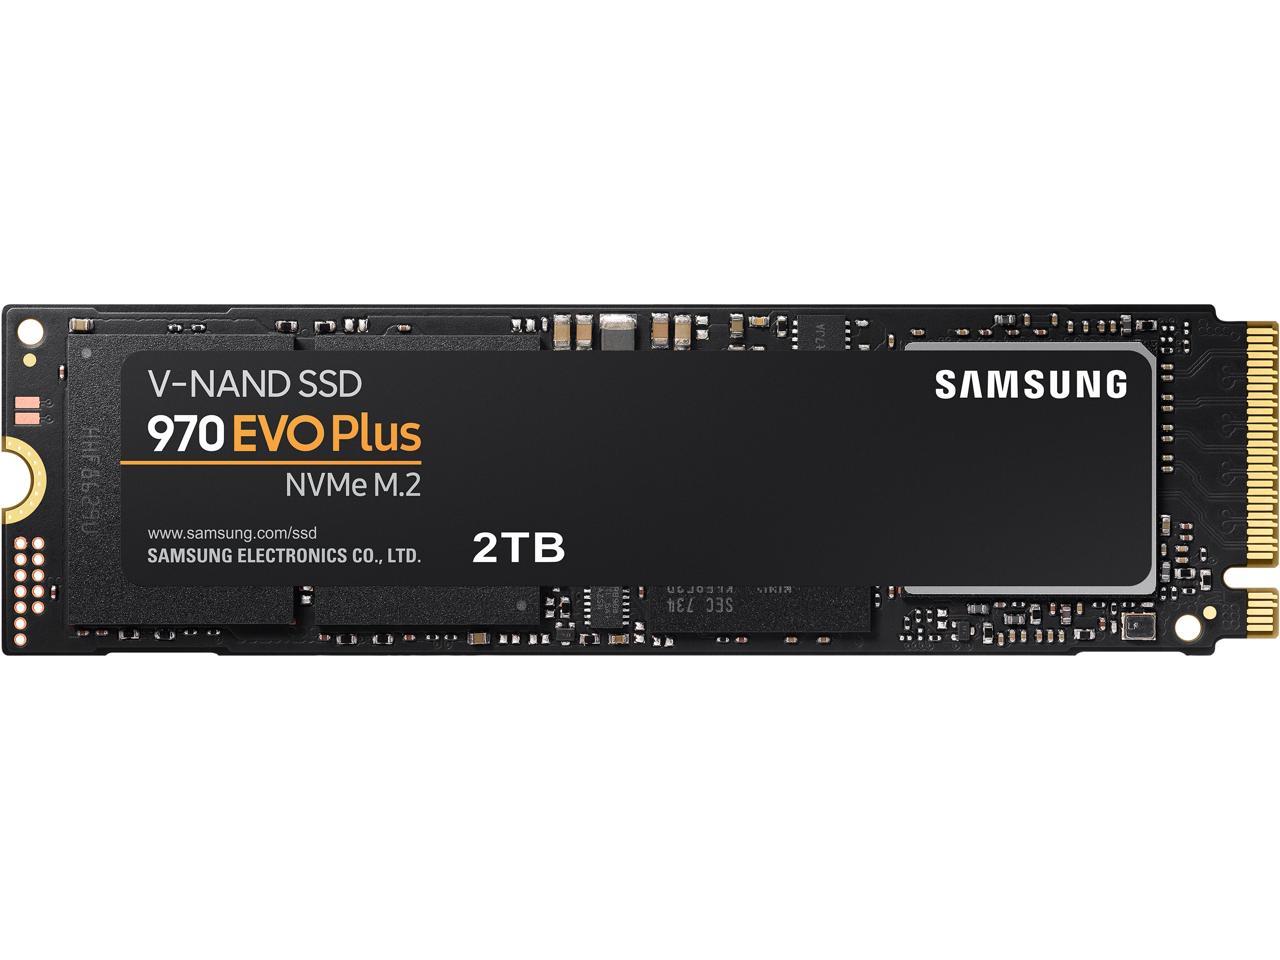 2TB Samsung 970 EVO Plus NVMe M.2 2280 V-NAND Internal Solid State Drive SSD $120 + Free Shipping